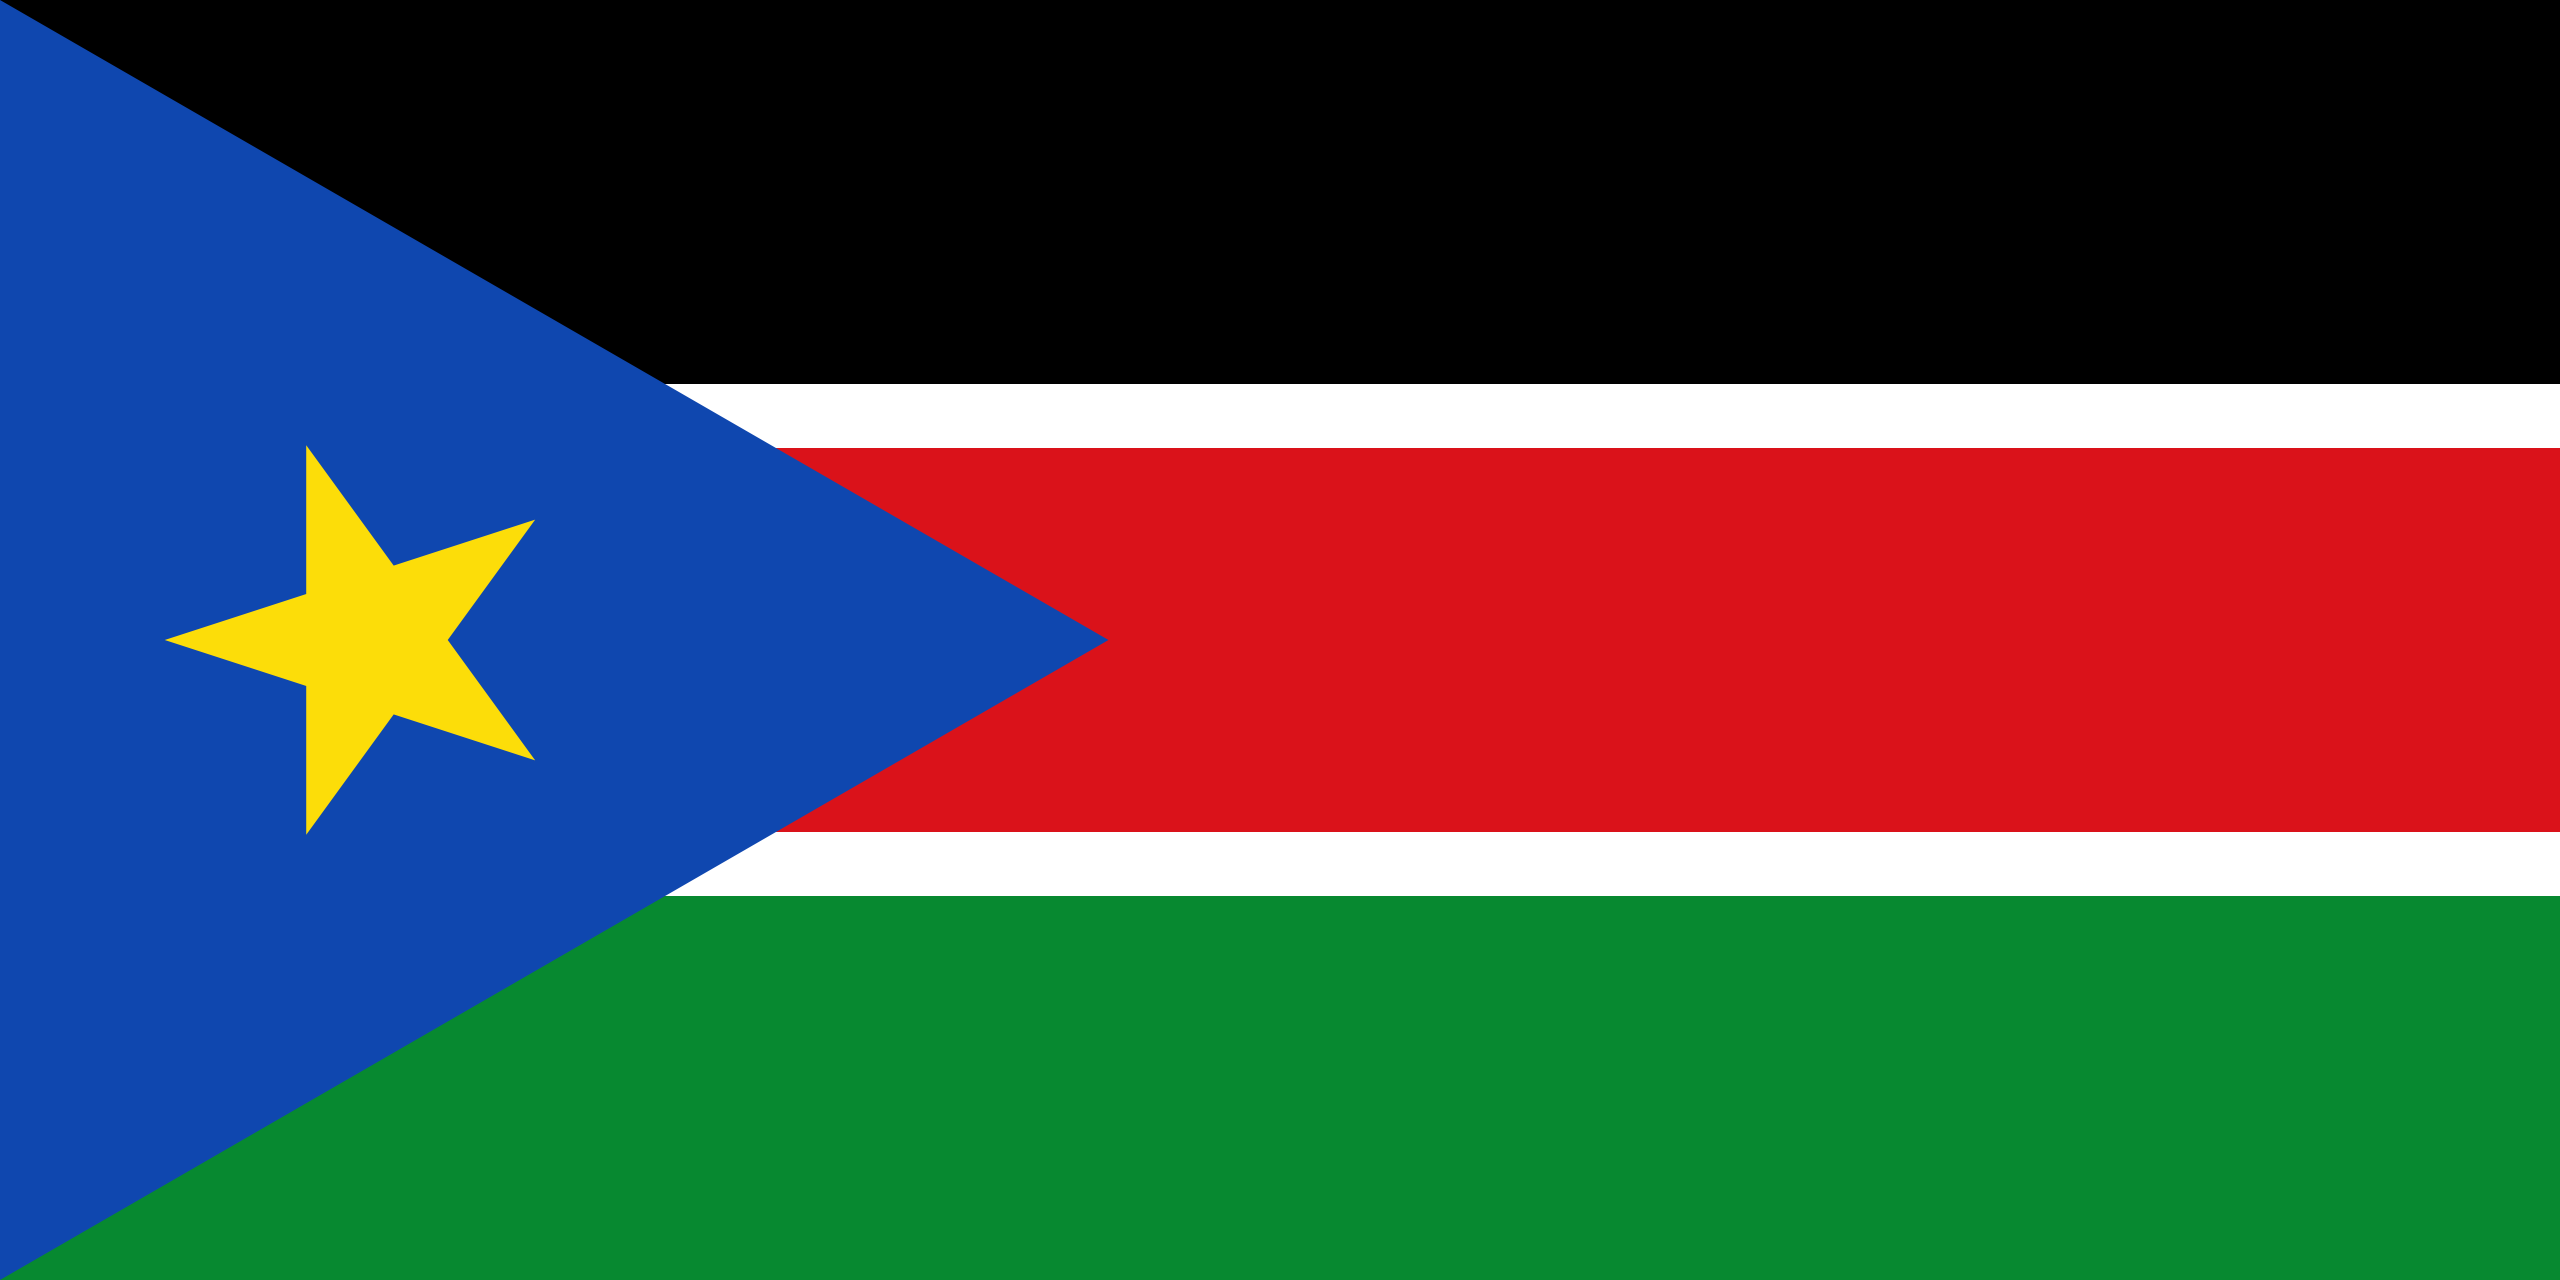 South Sudan's flag